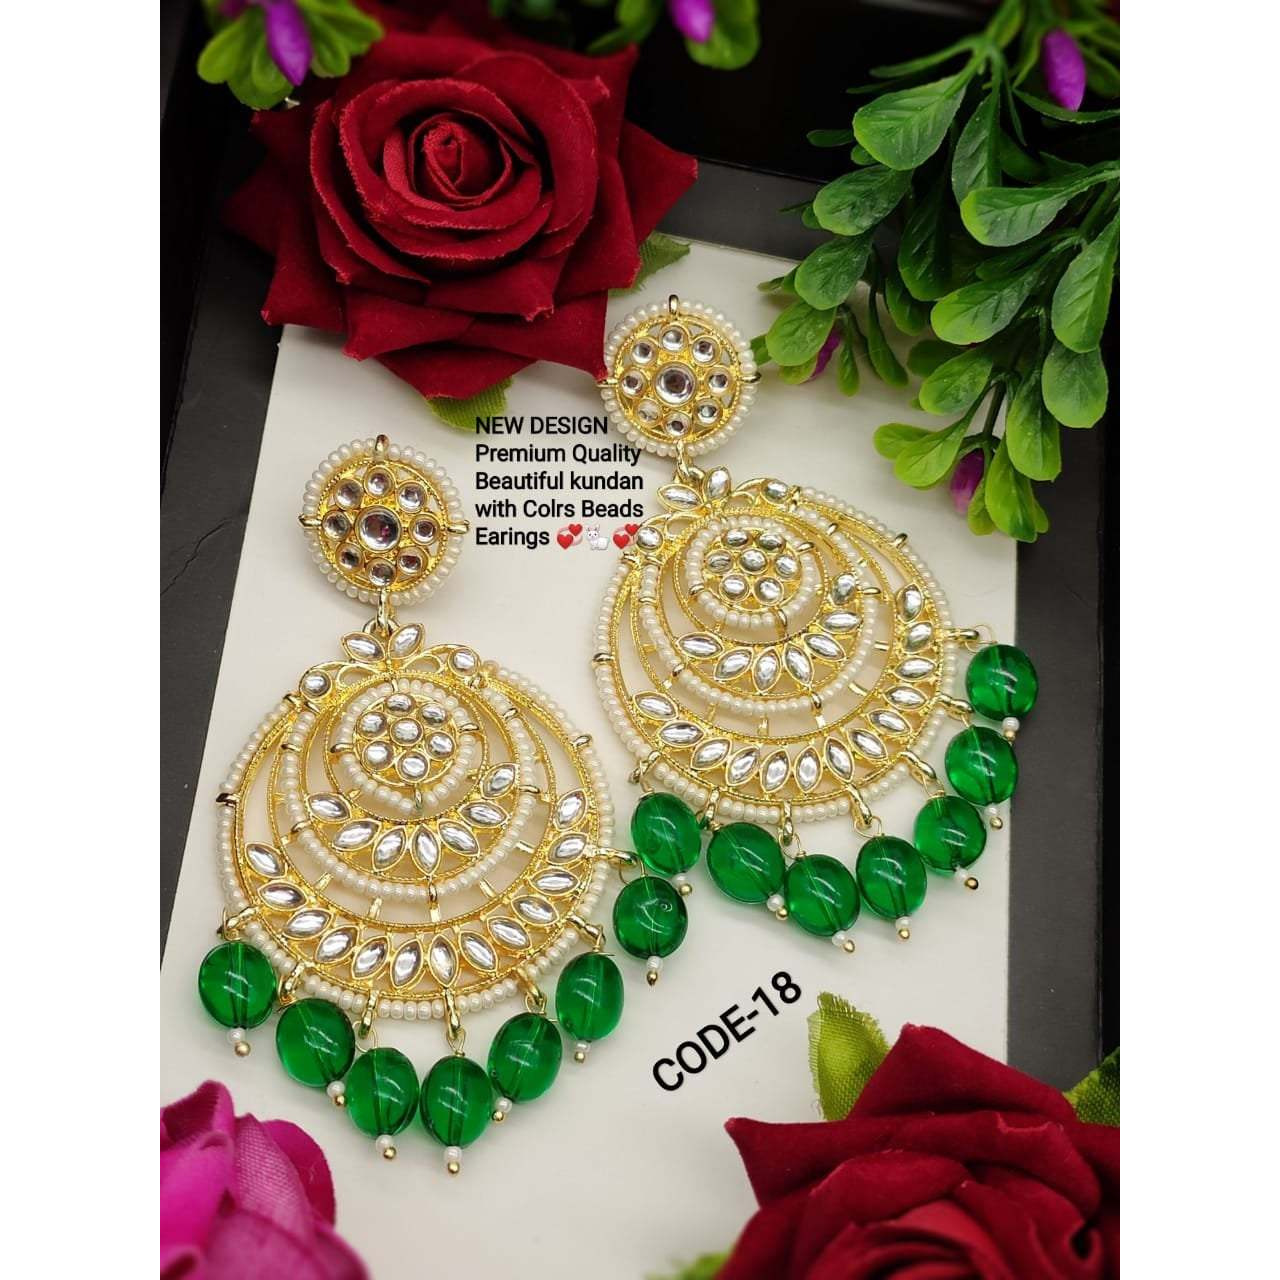 Kundan pearl chandbali Earrings with colorful beads, Indian earrings, Indian jewellery, wedding jewellery, gifts for her, anniversary gift